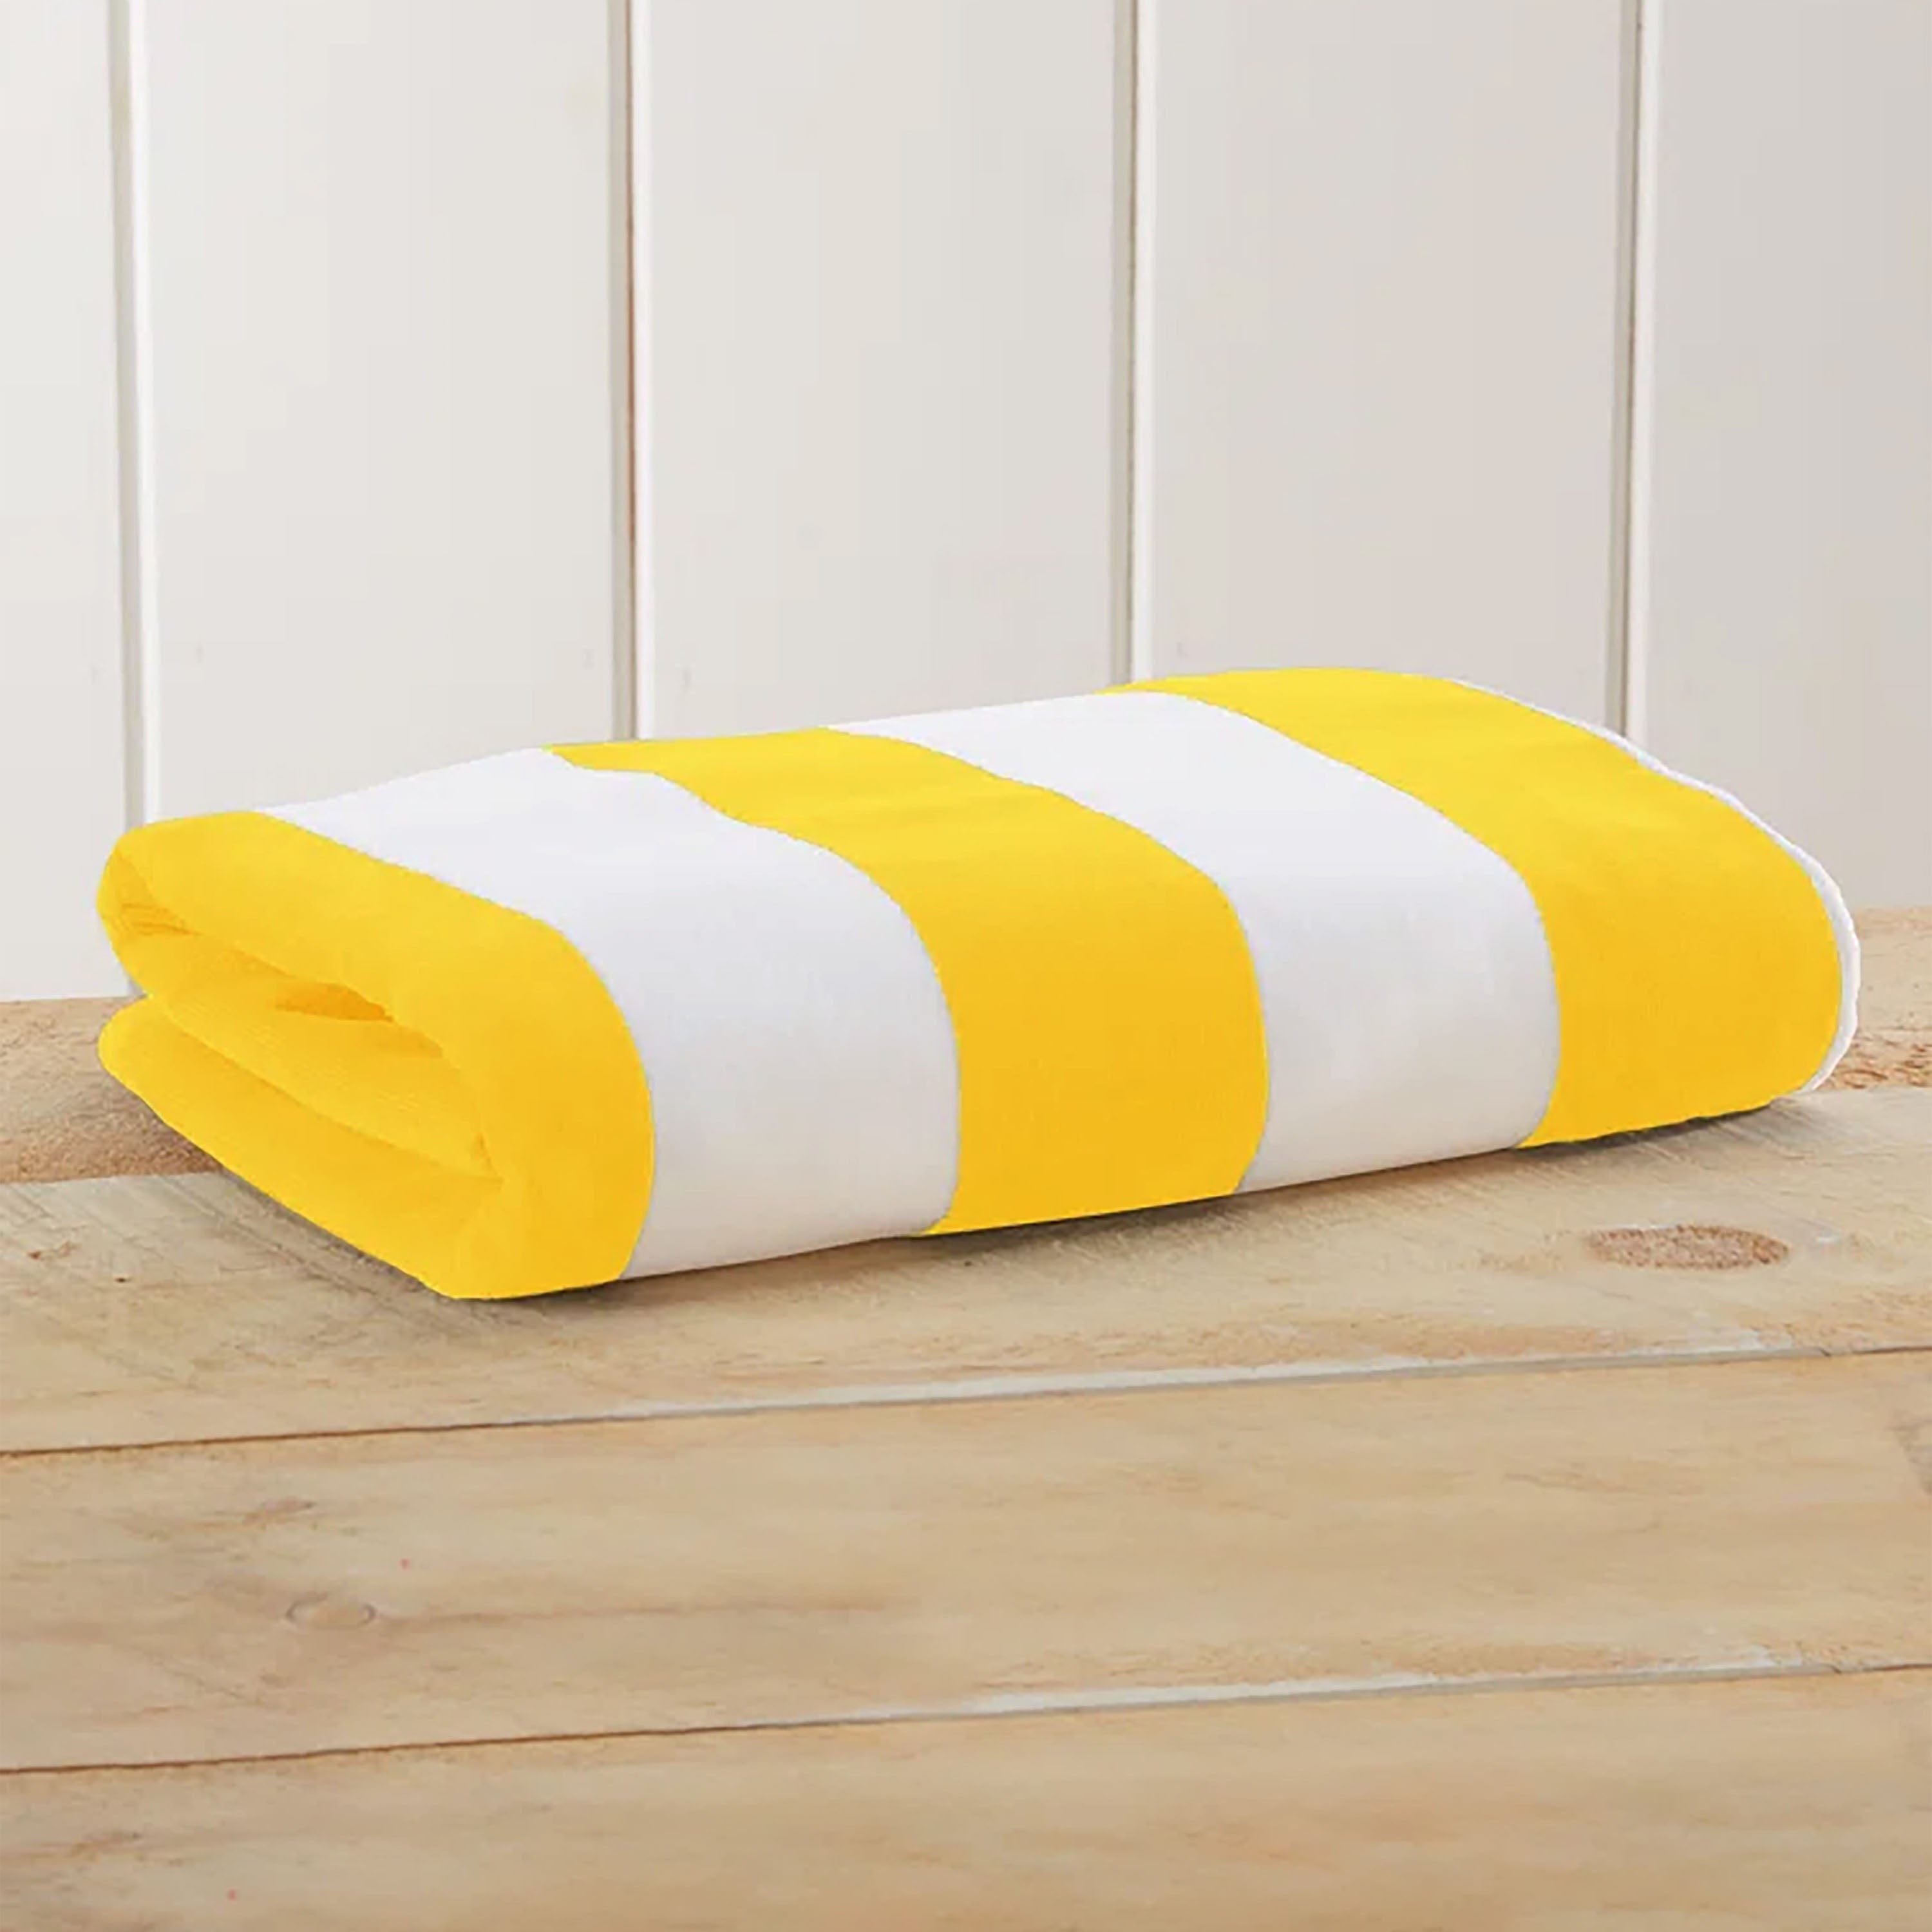 Cotton Home Striped Pool Towel 100% Cotton Yellow